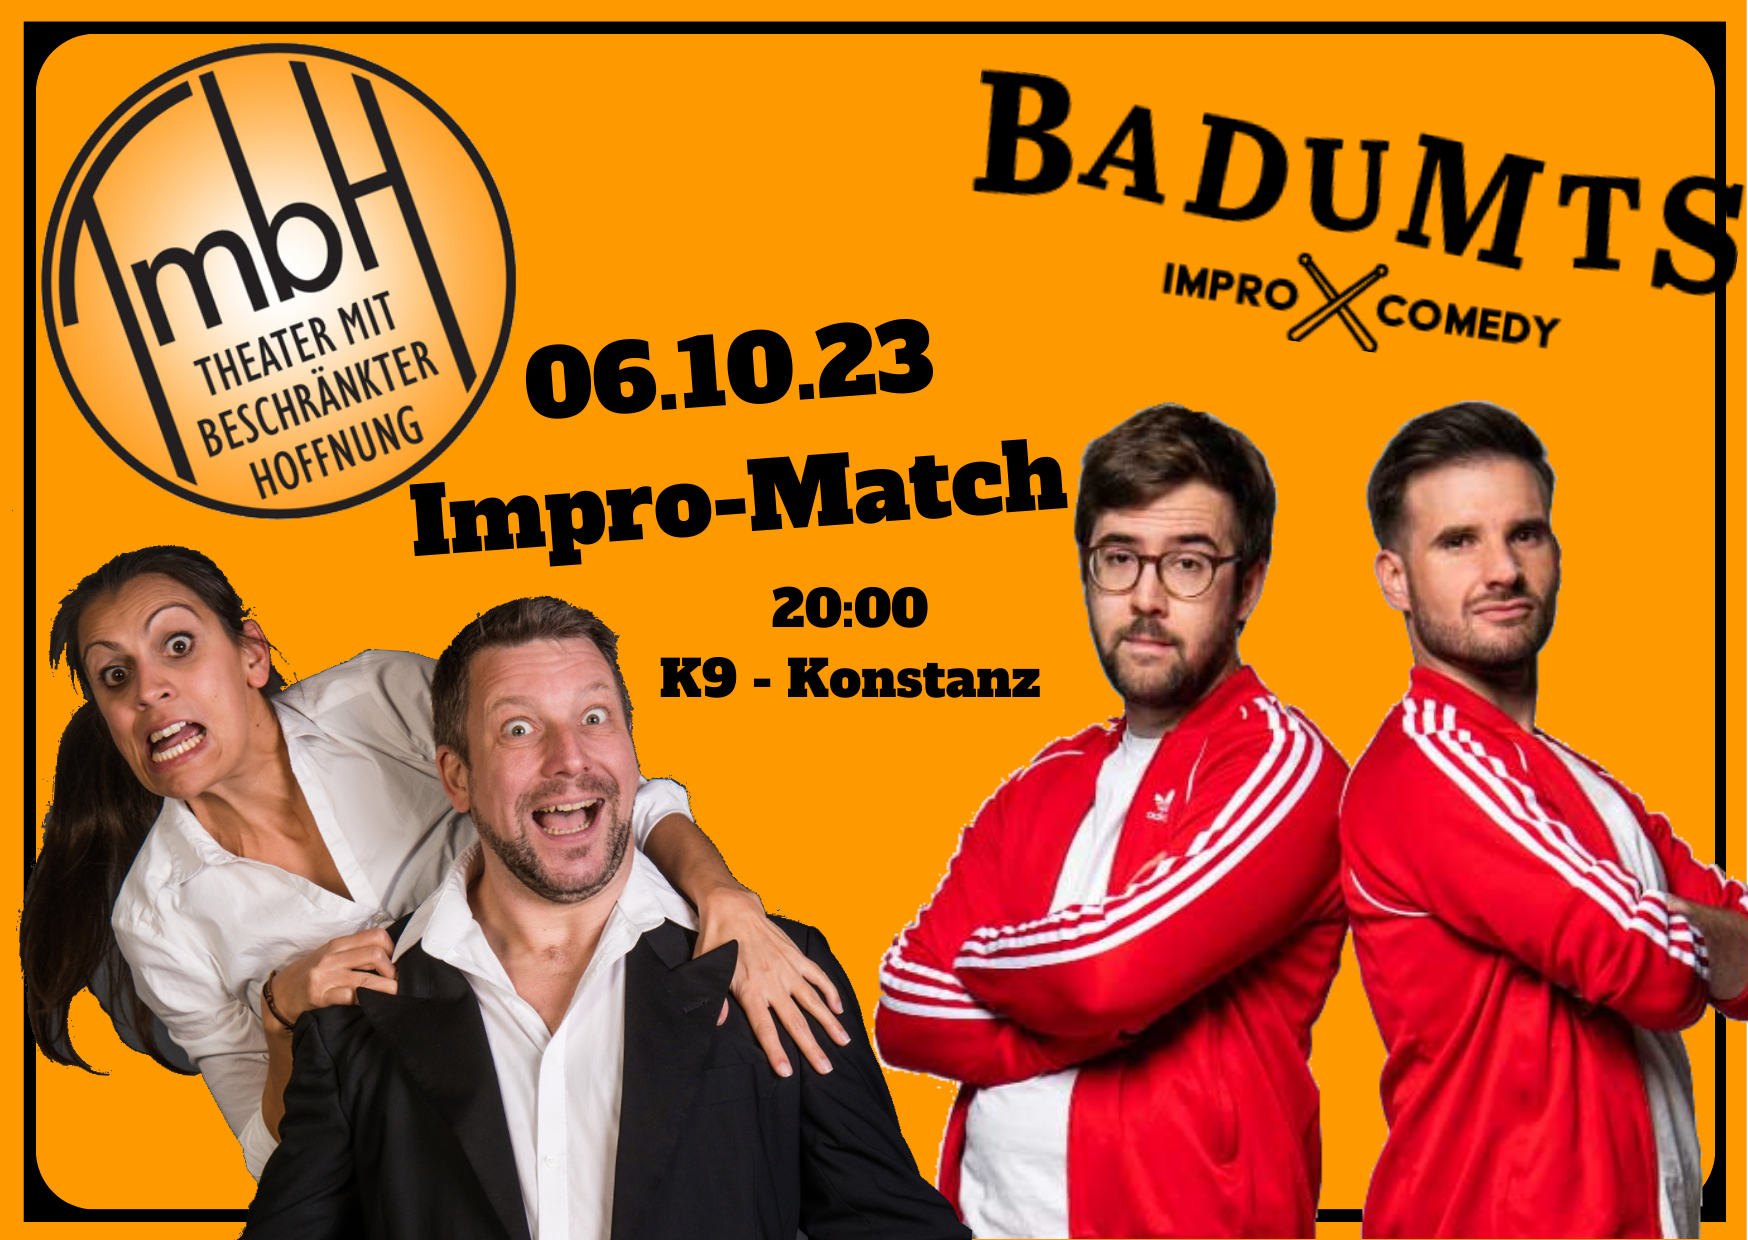 TmbH das Impro-Match mit Badumts aus Winterthur